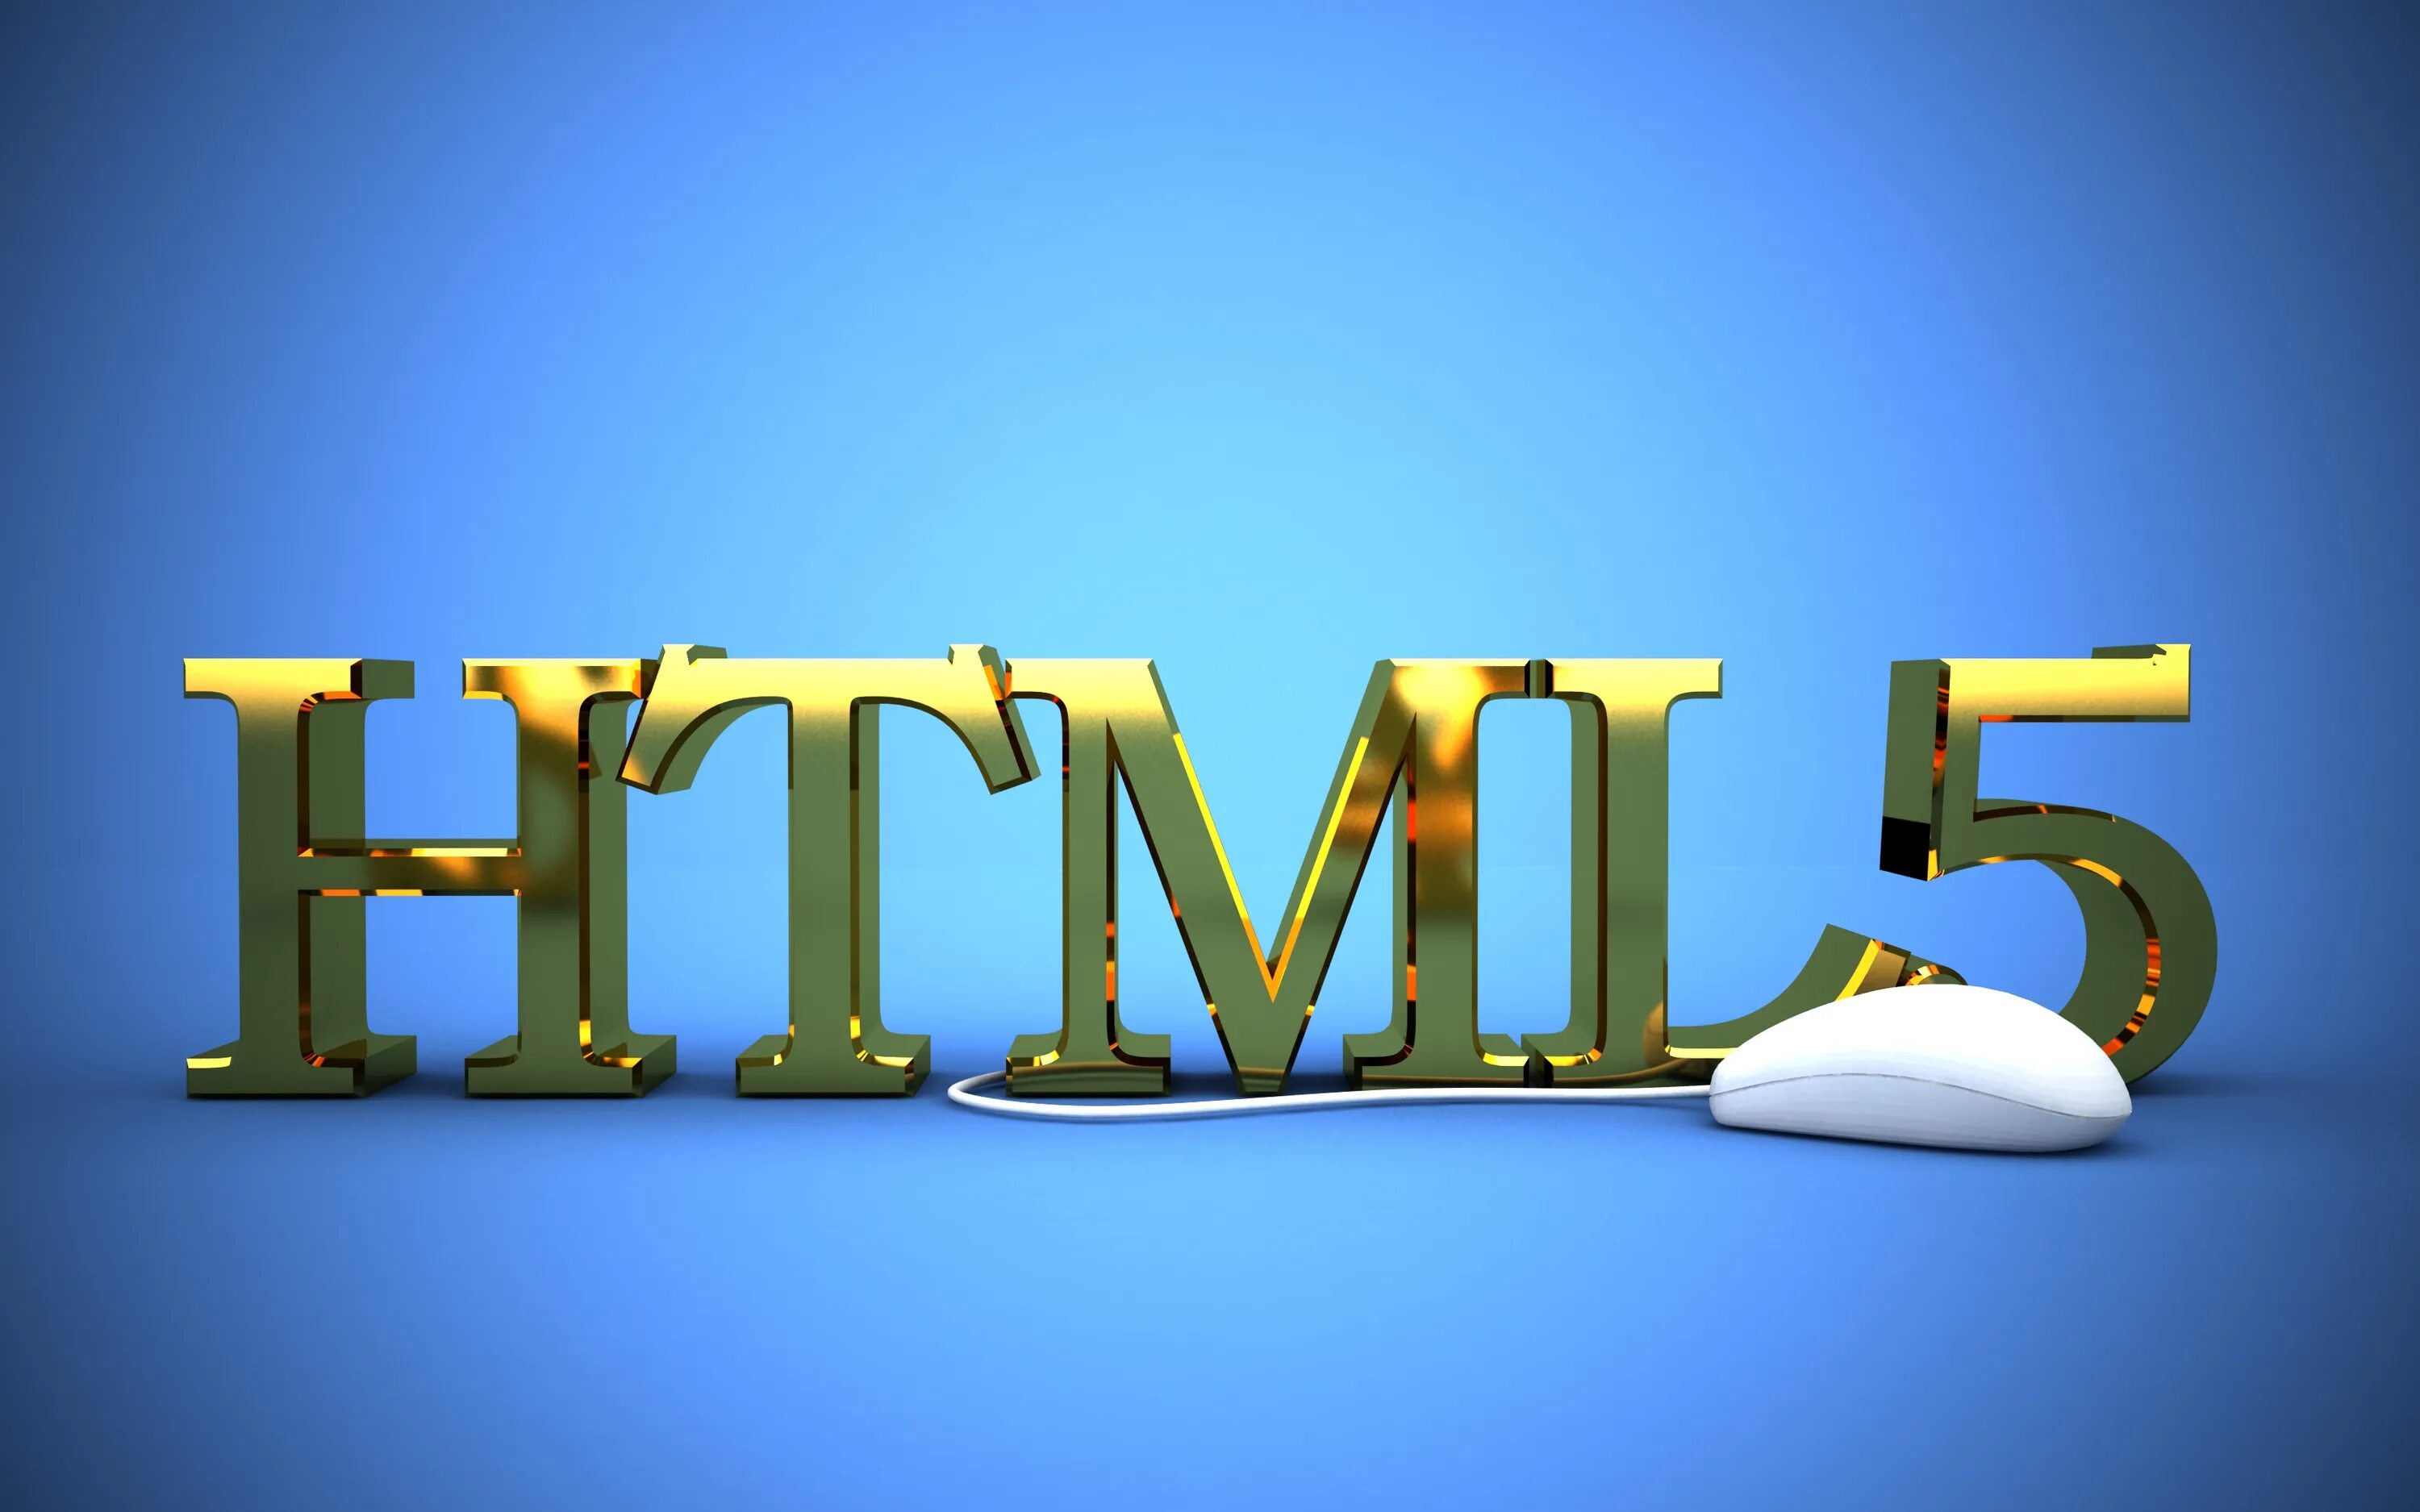 Картинка html. Изображение в html. Html рисунок. Картинки на тему html. Логотип сайта html